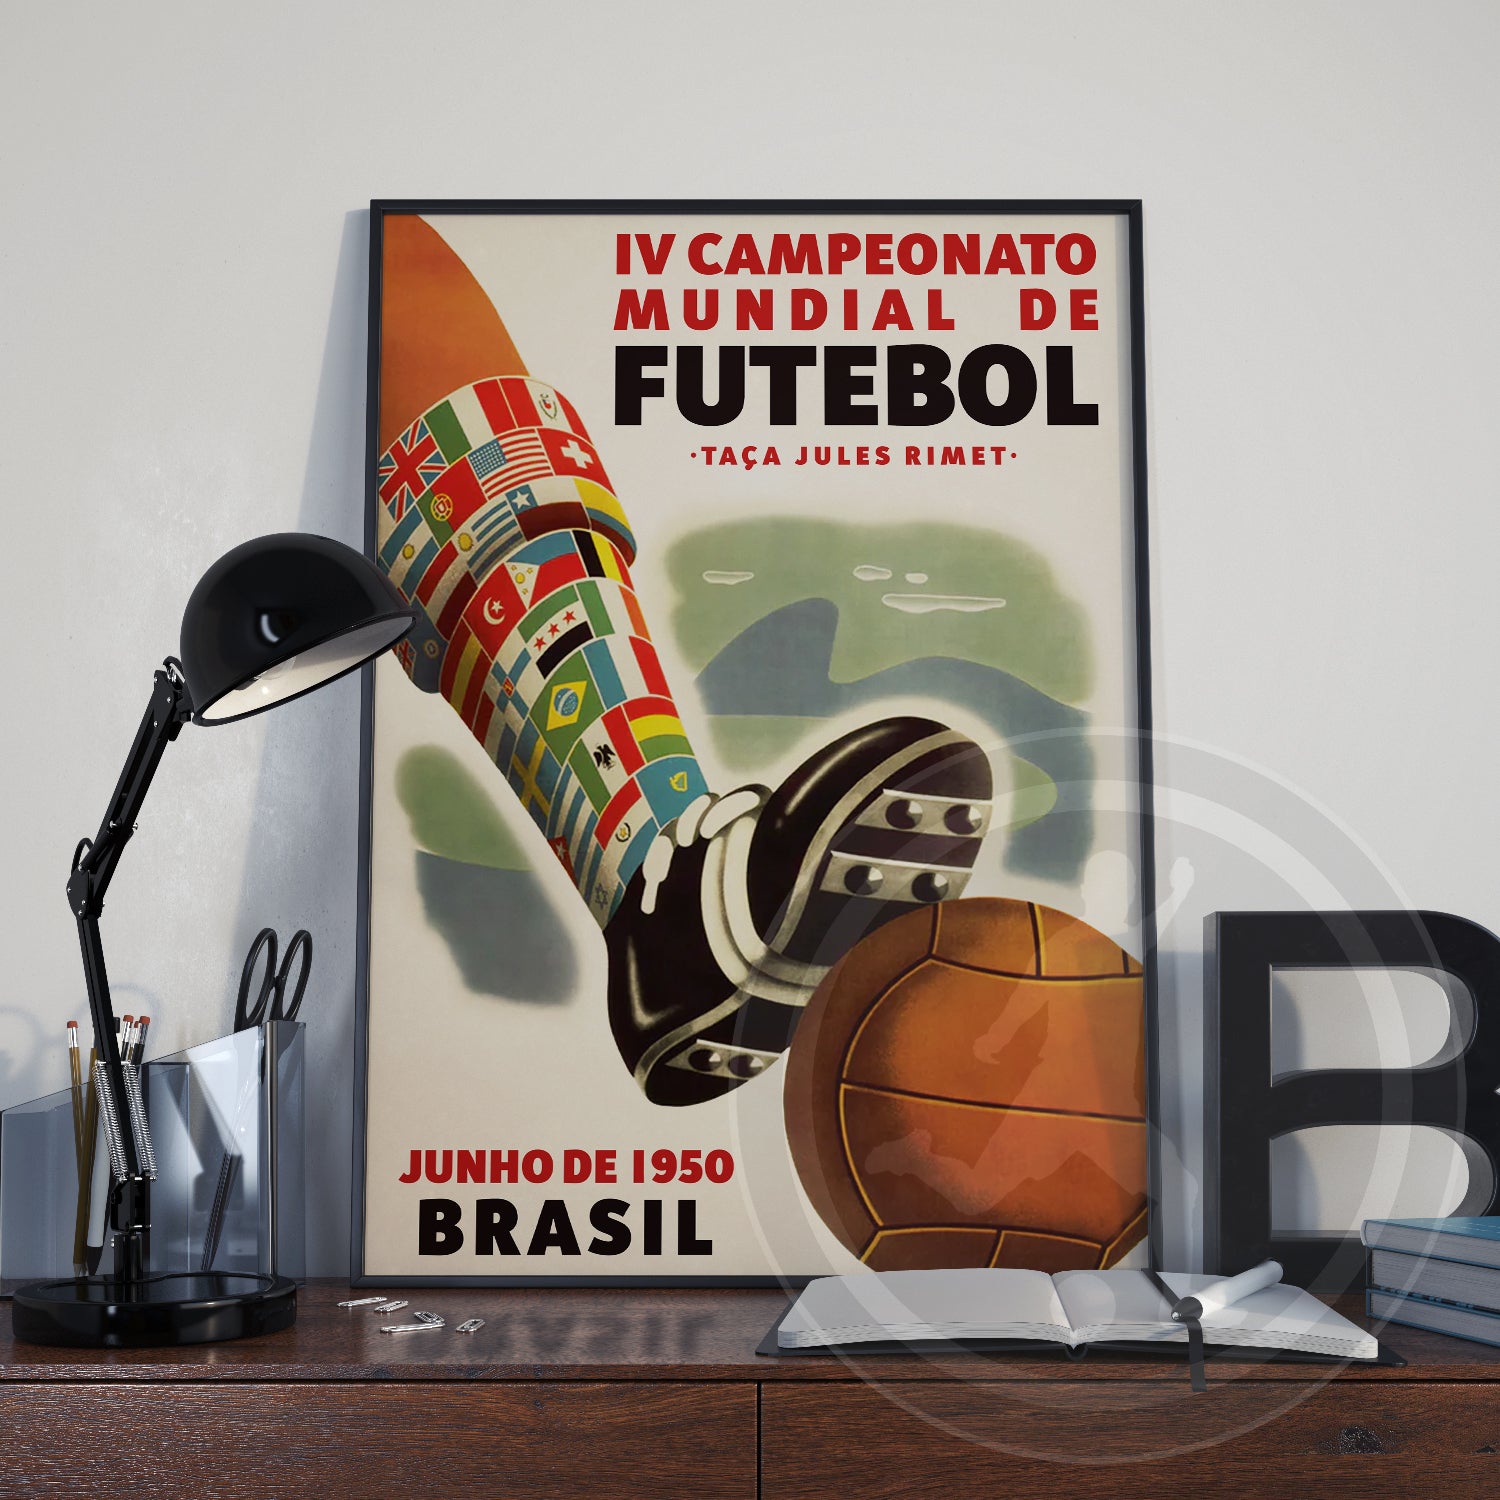 1950 BRASIL WORLD CUP POSTER